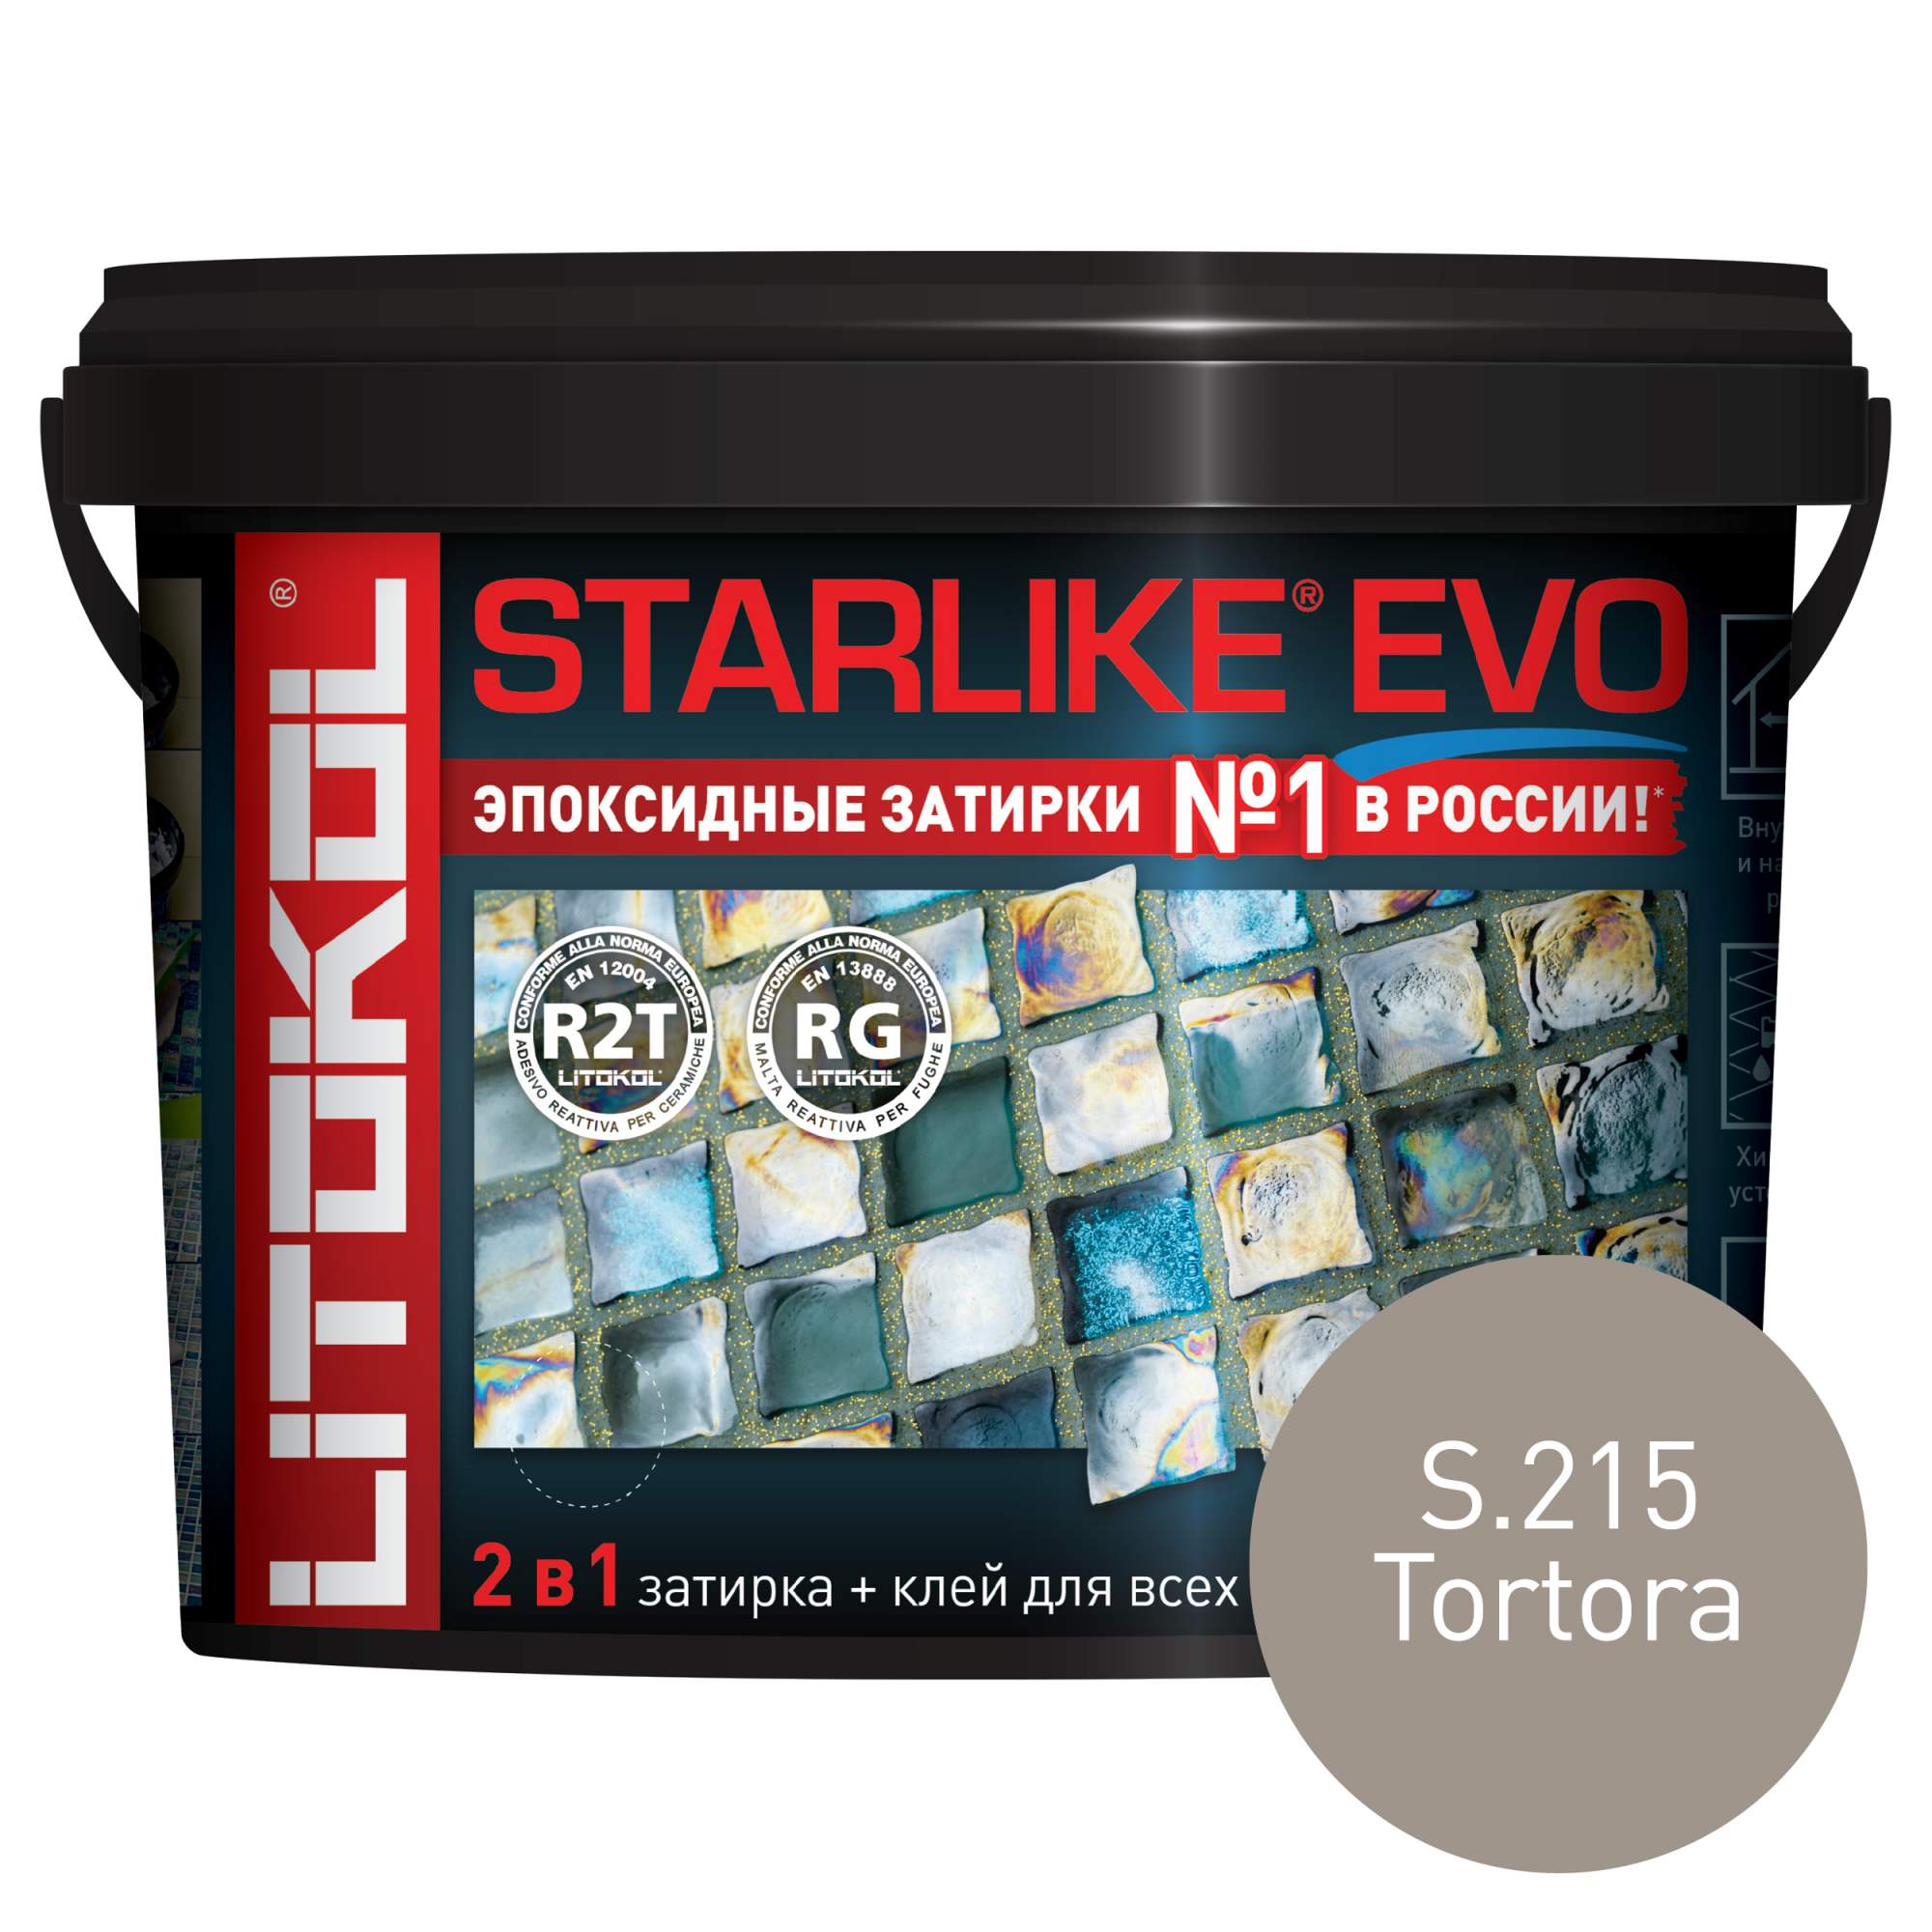 фото Эпоксидная затирка litokol starlike evo s.215 tortora, 5 кг литокол